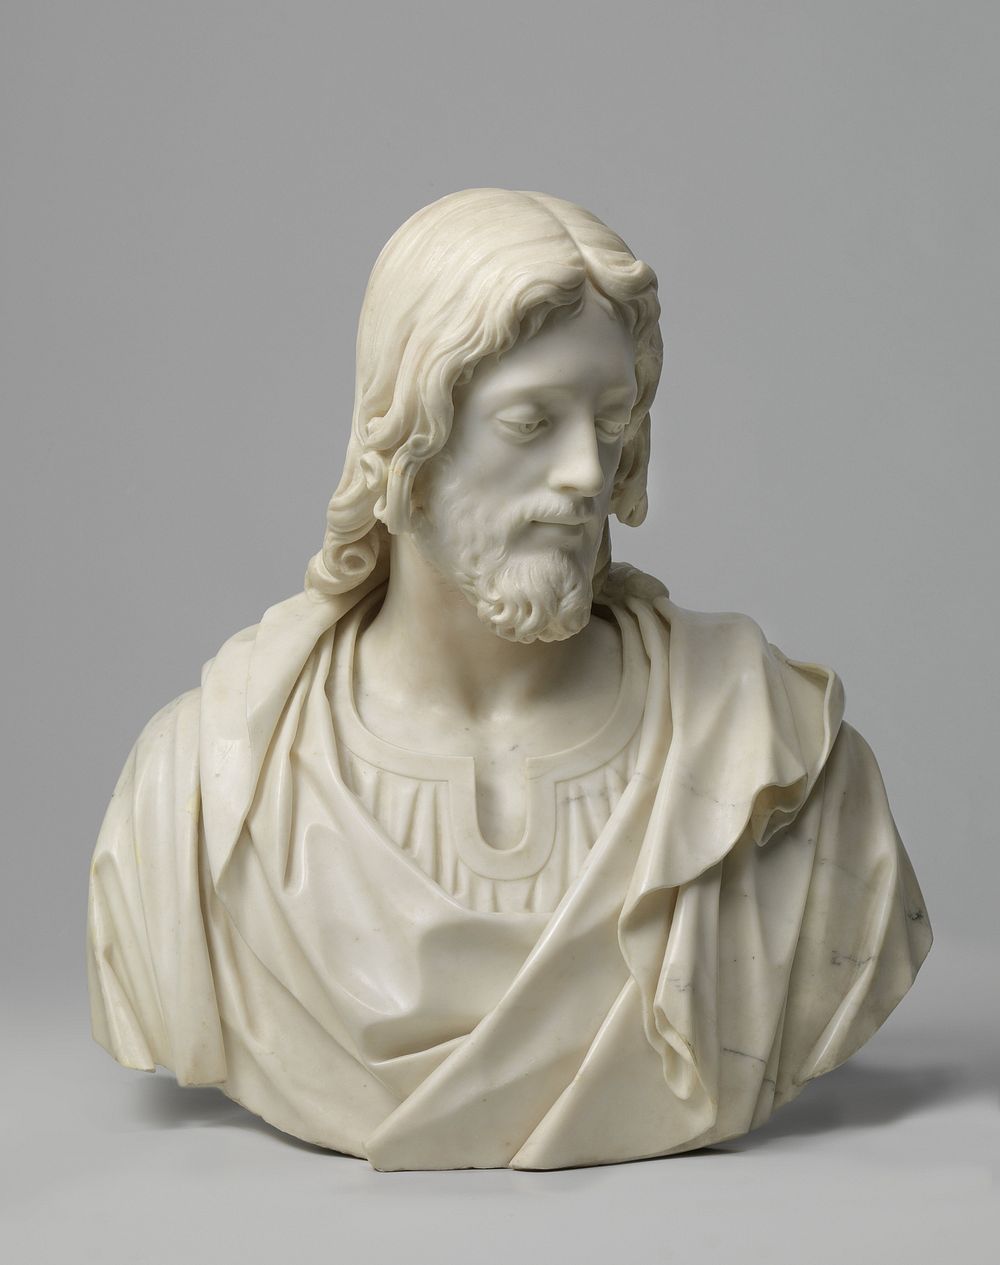 Christ as Saviour (c. 1598) by Giovanni Battista Caccini